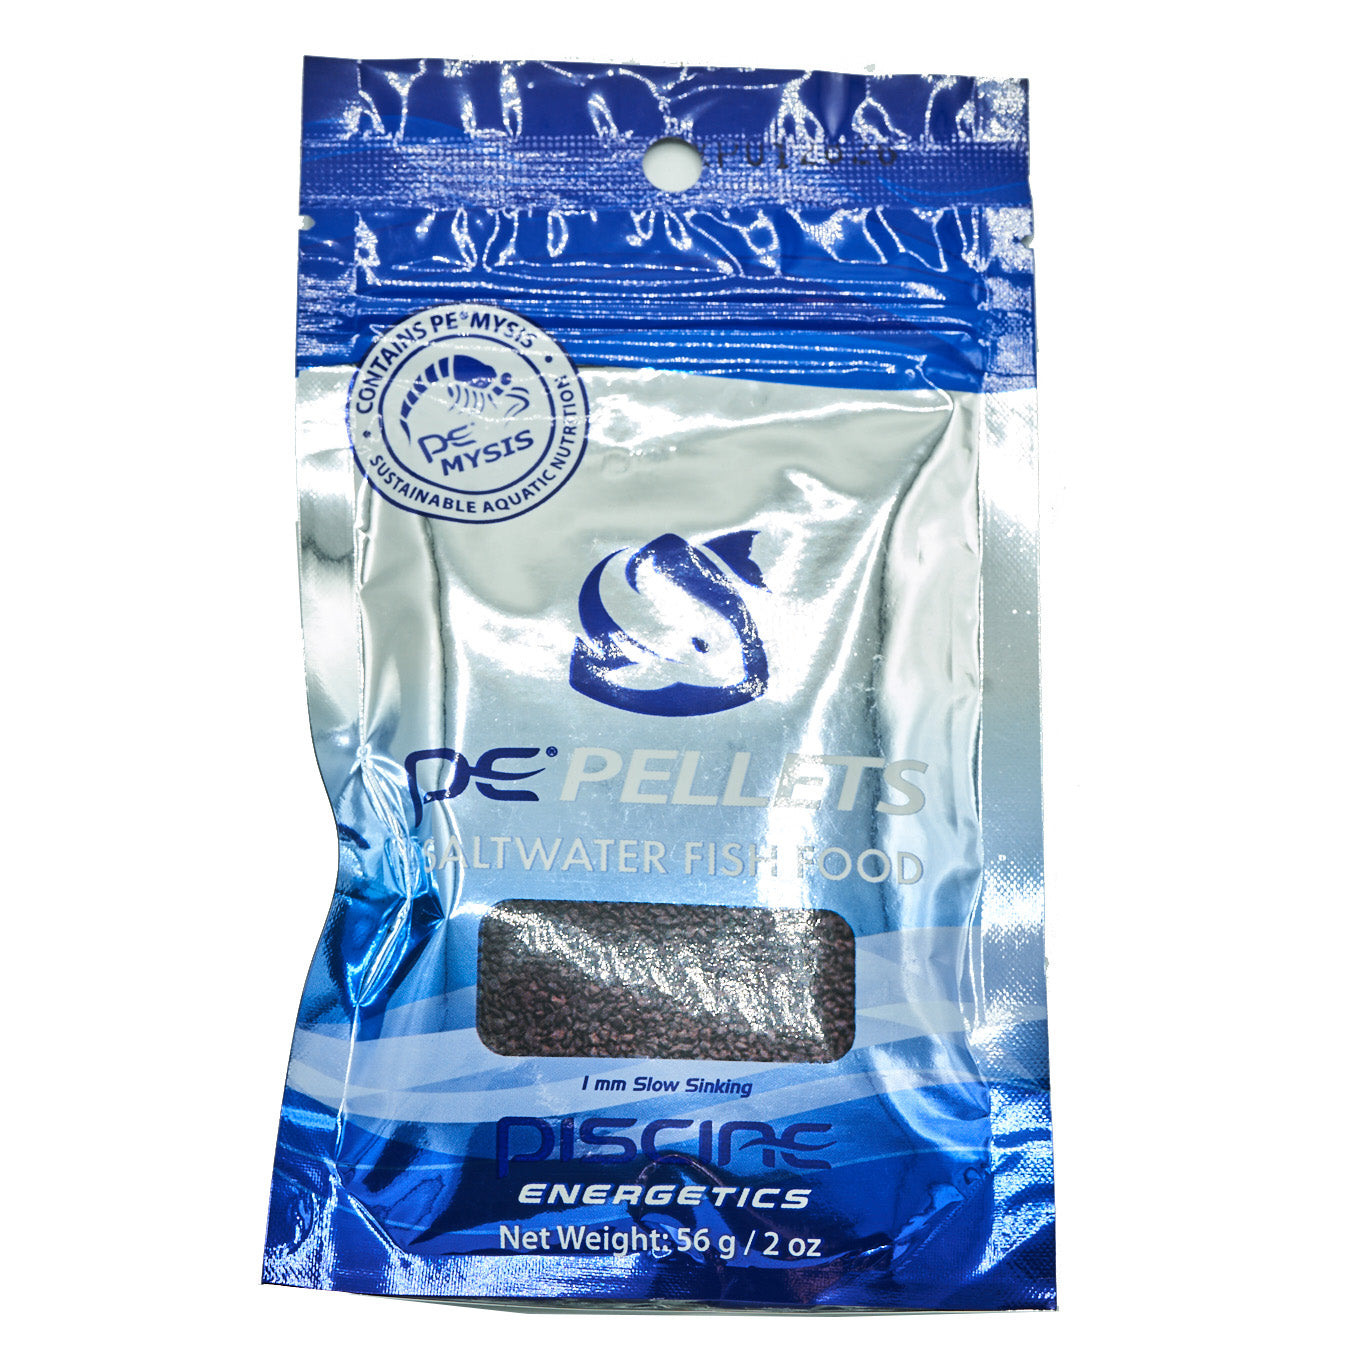 PE Pellets Saltwater Fish Food 1mm/2oz